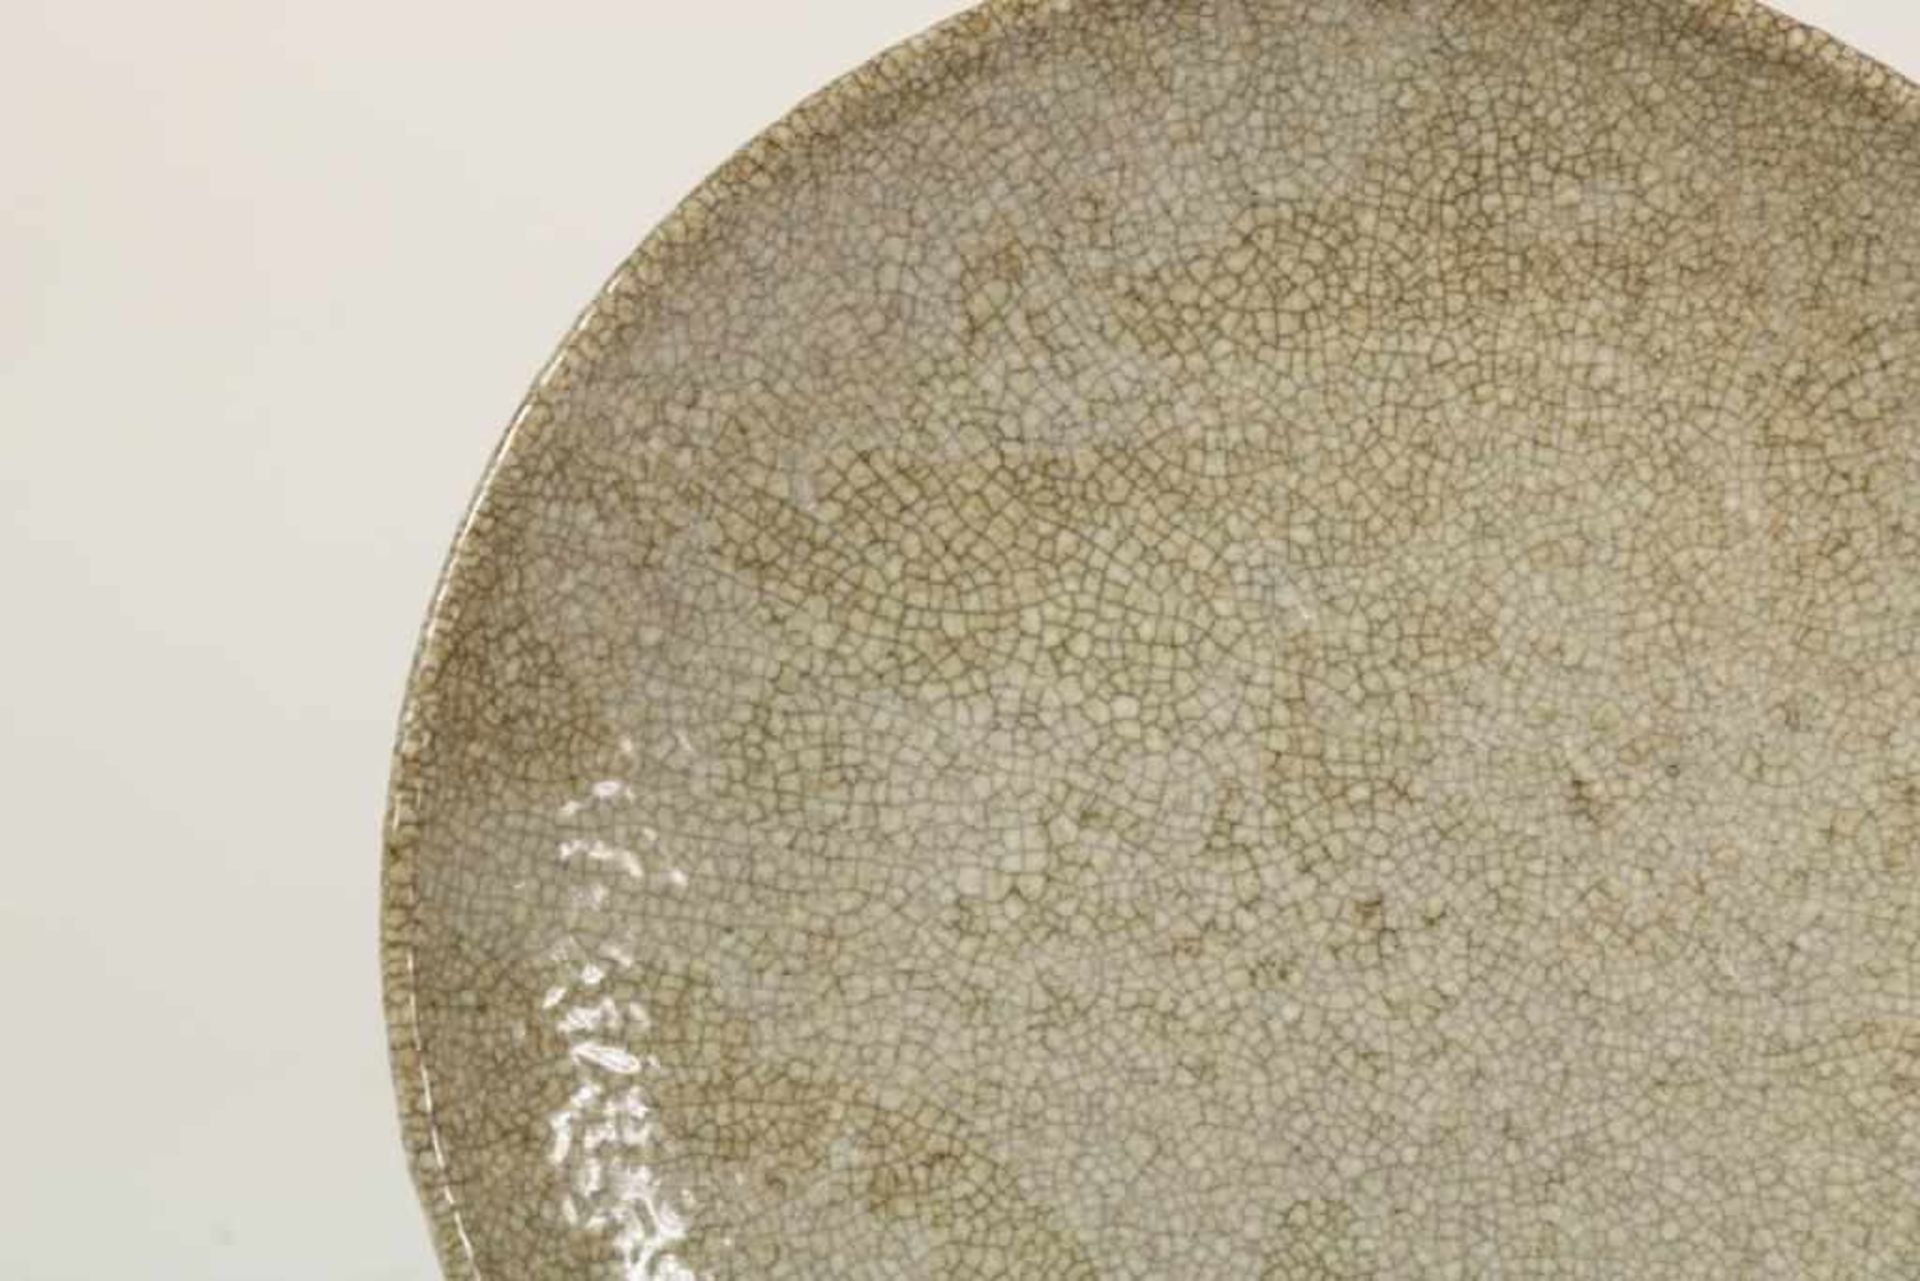 Porseleinen celedon schaal, China vermoedelijk 18e eeuw, diam. 24 cm. - Bild 2 aus 3